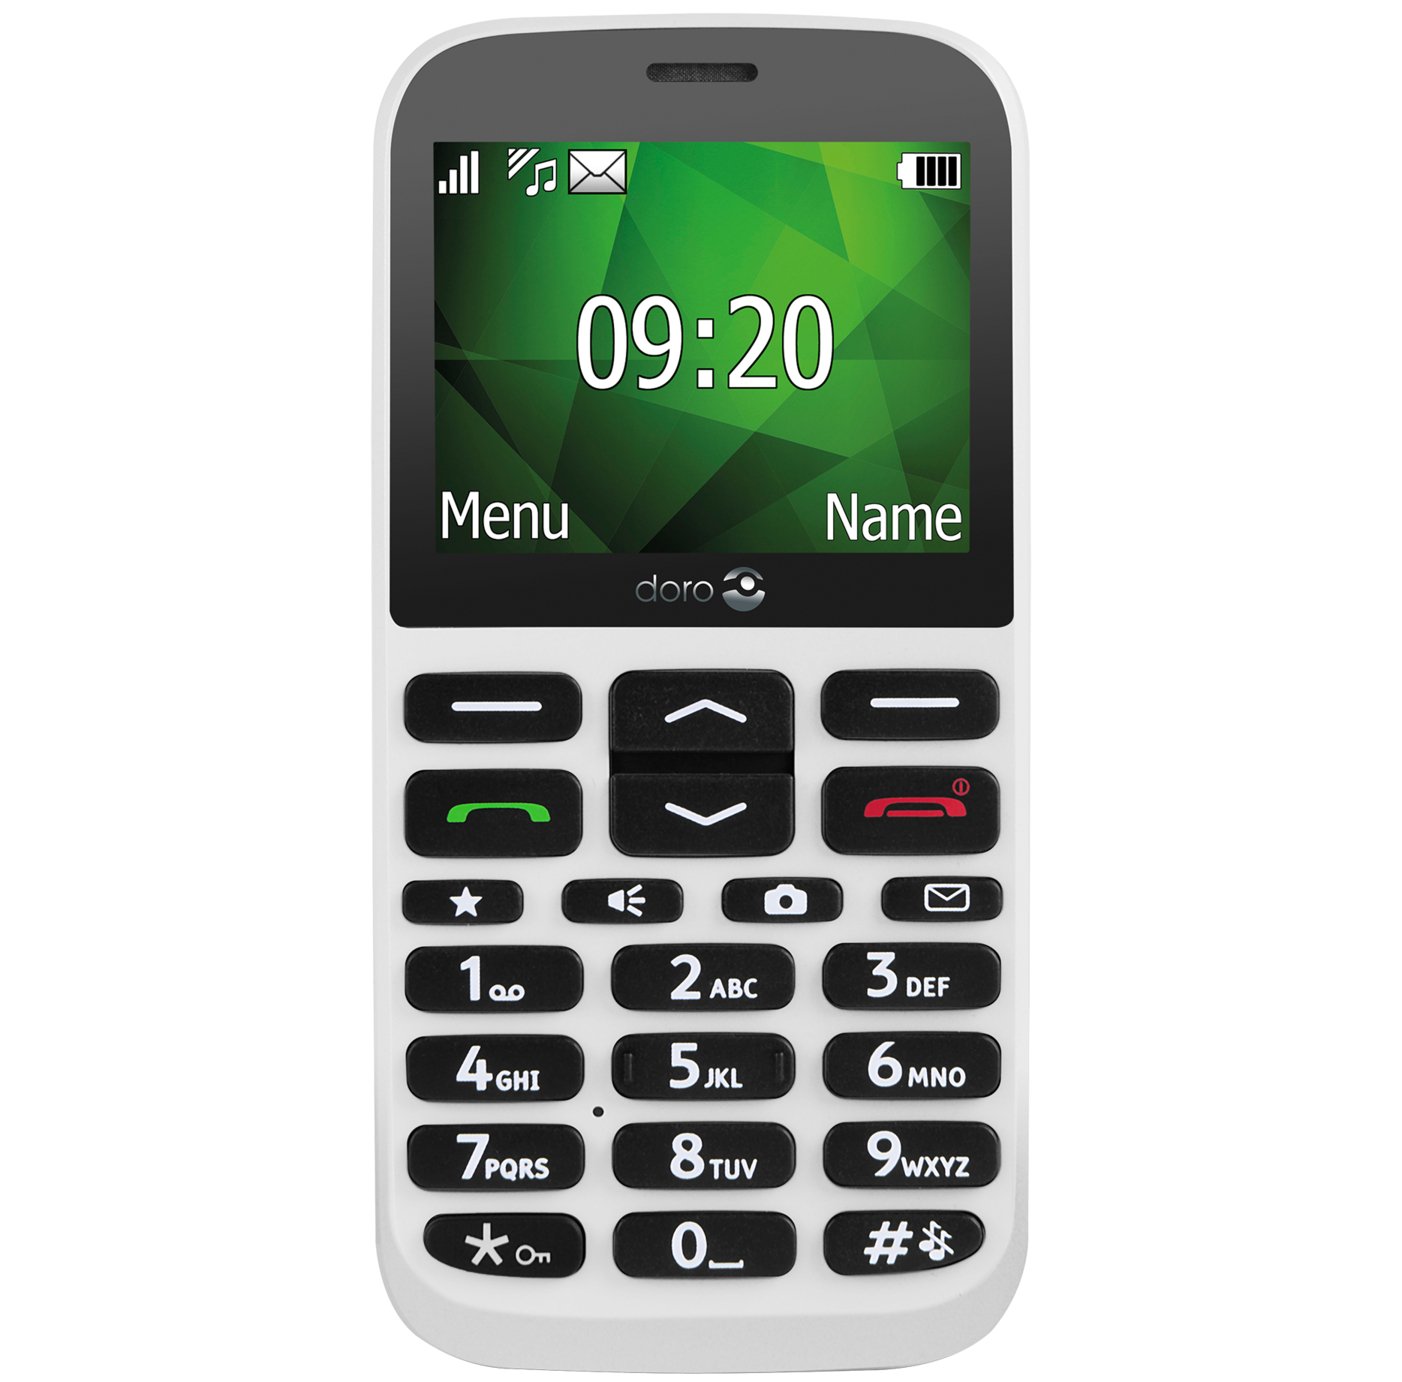 Vodafone Doro 1370 Mobile Phone Review